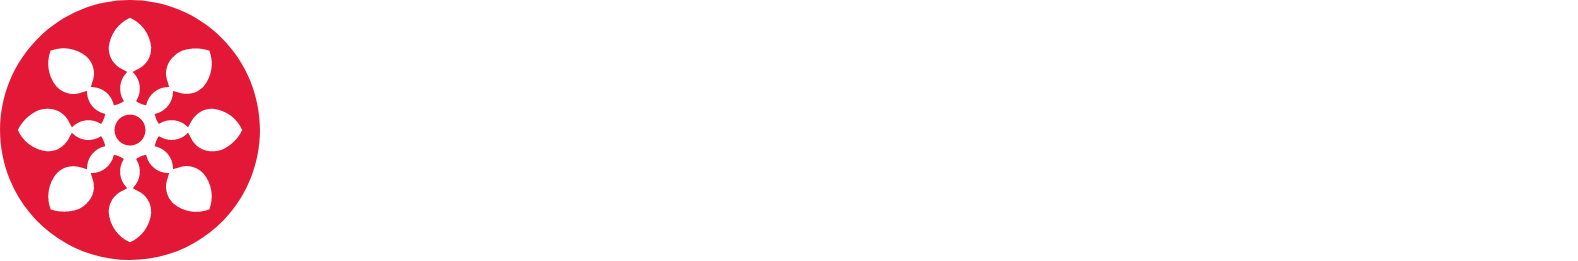 Neowiz Games
 logo large for dark backgrounds (transparent PNG)